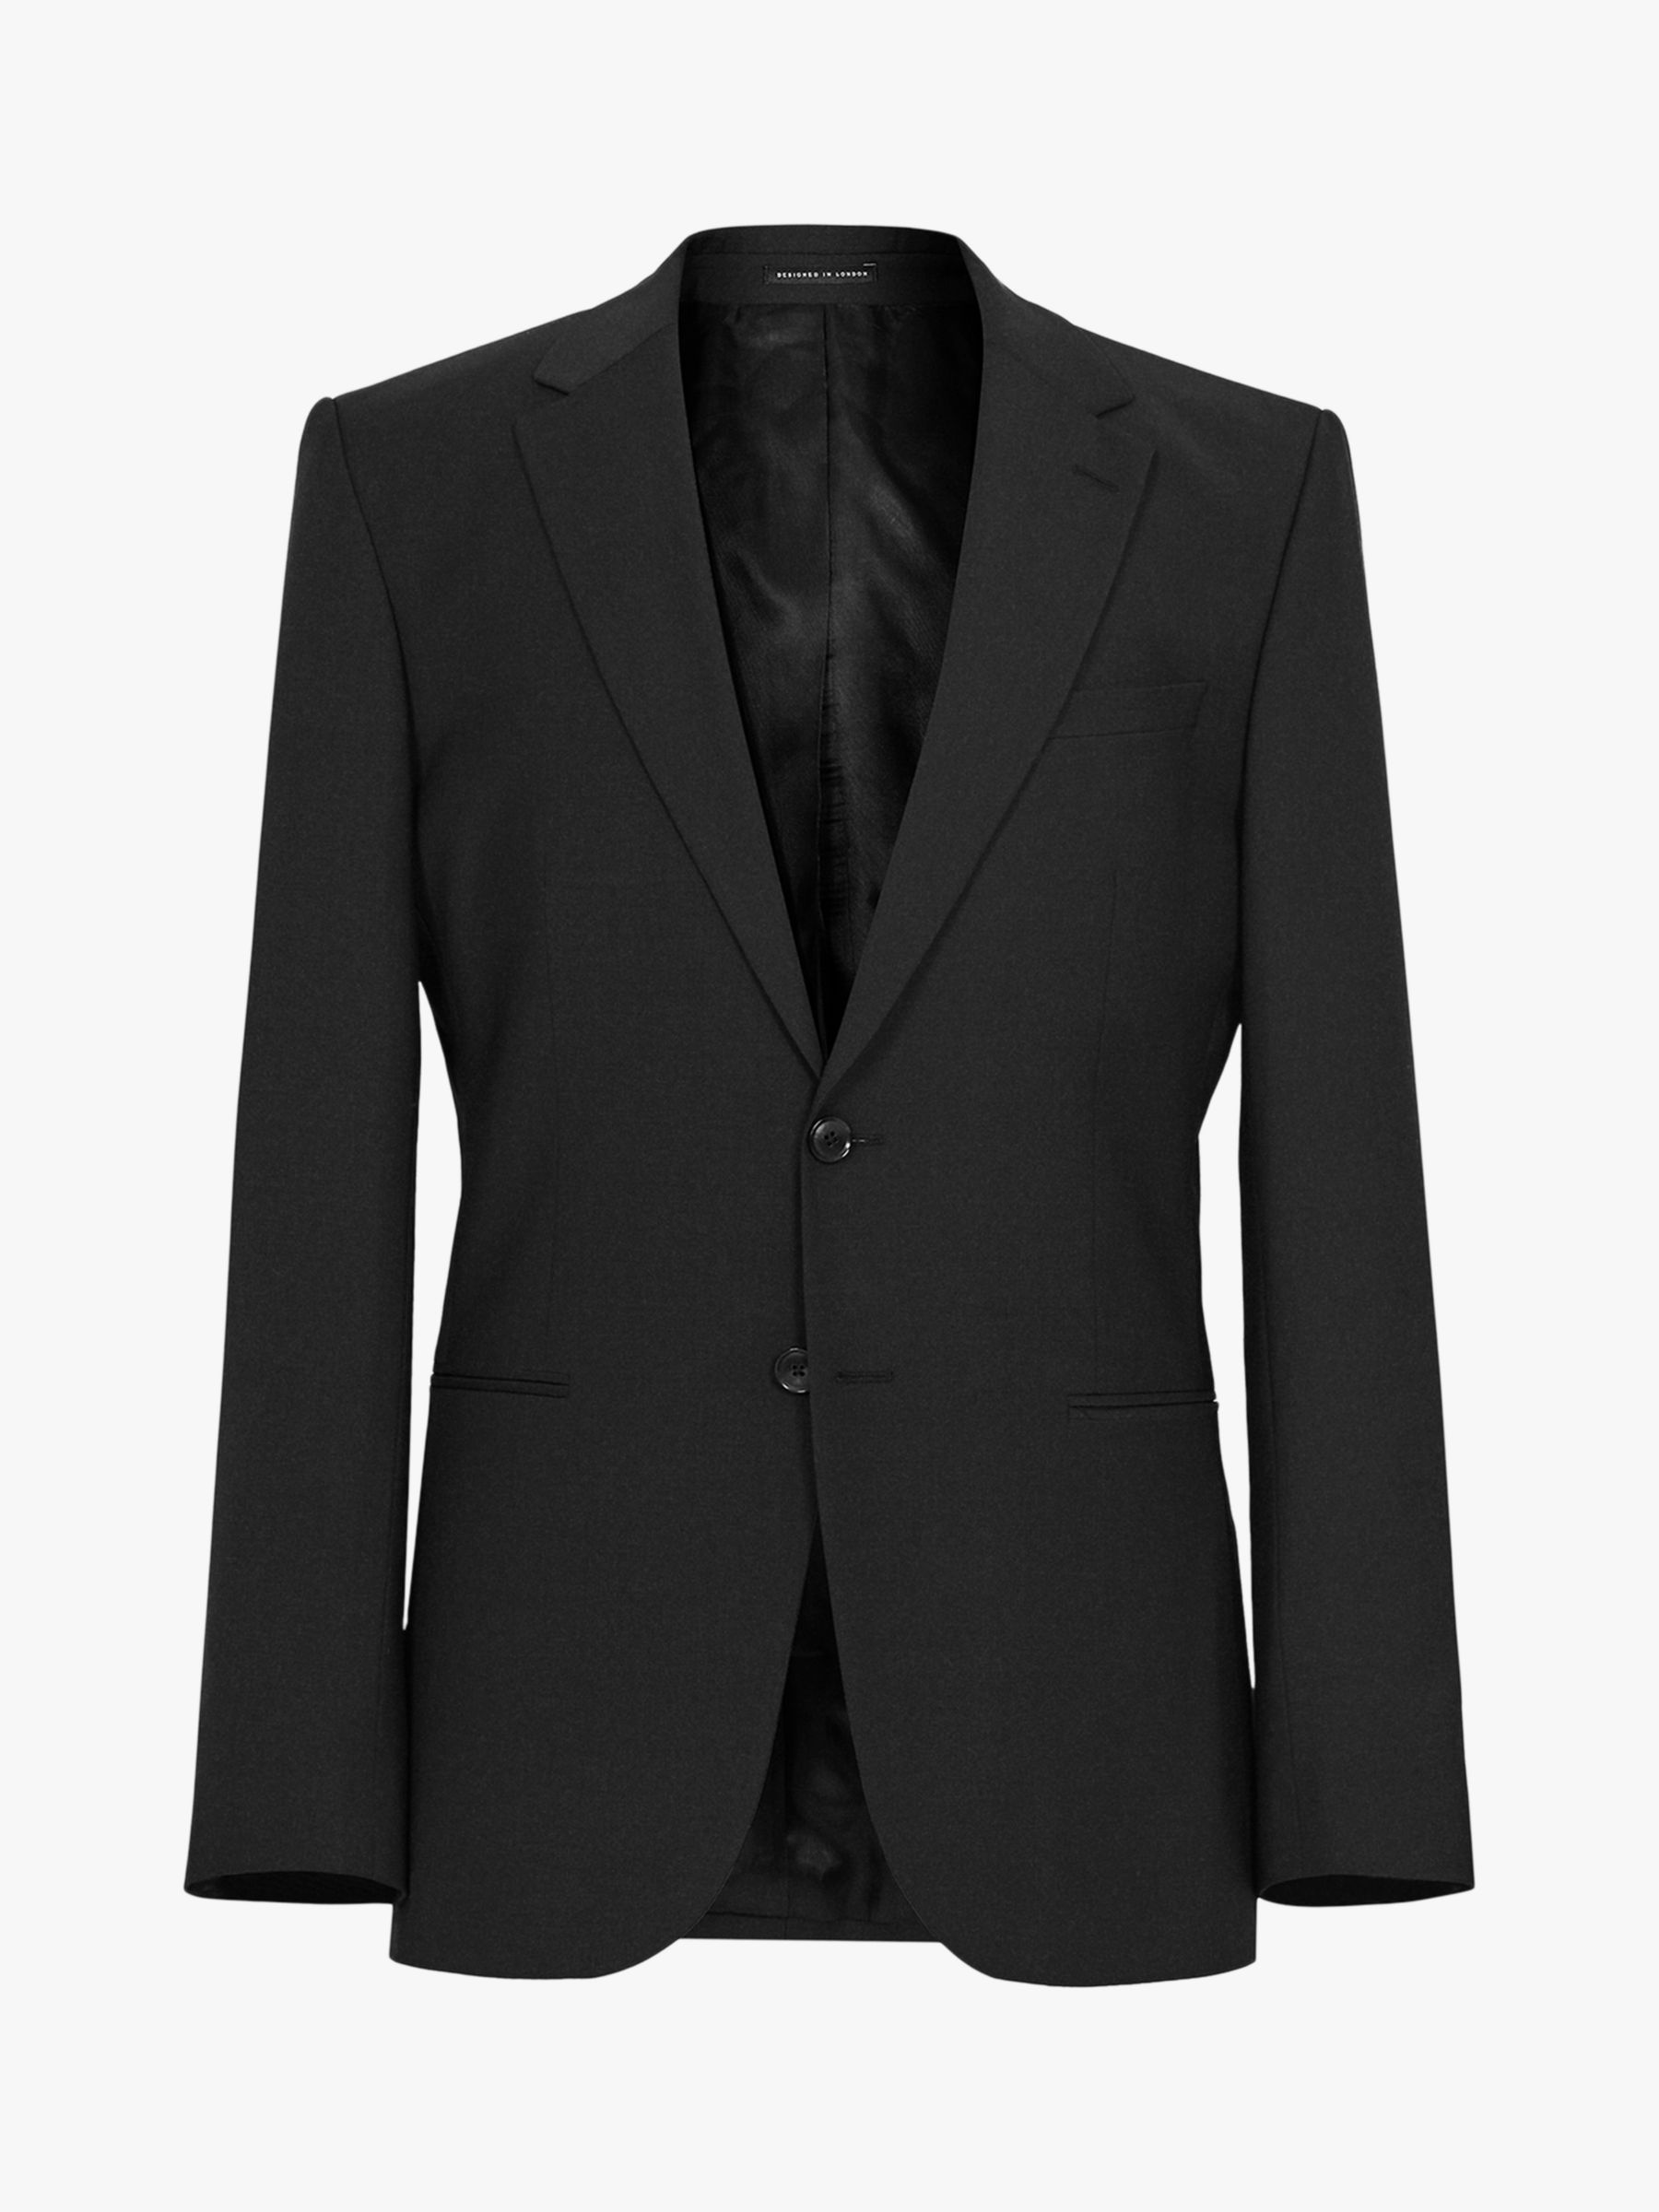 Reiss Hope Tailored Fit Suit Jacket, Black